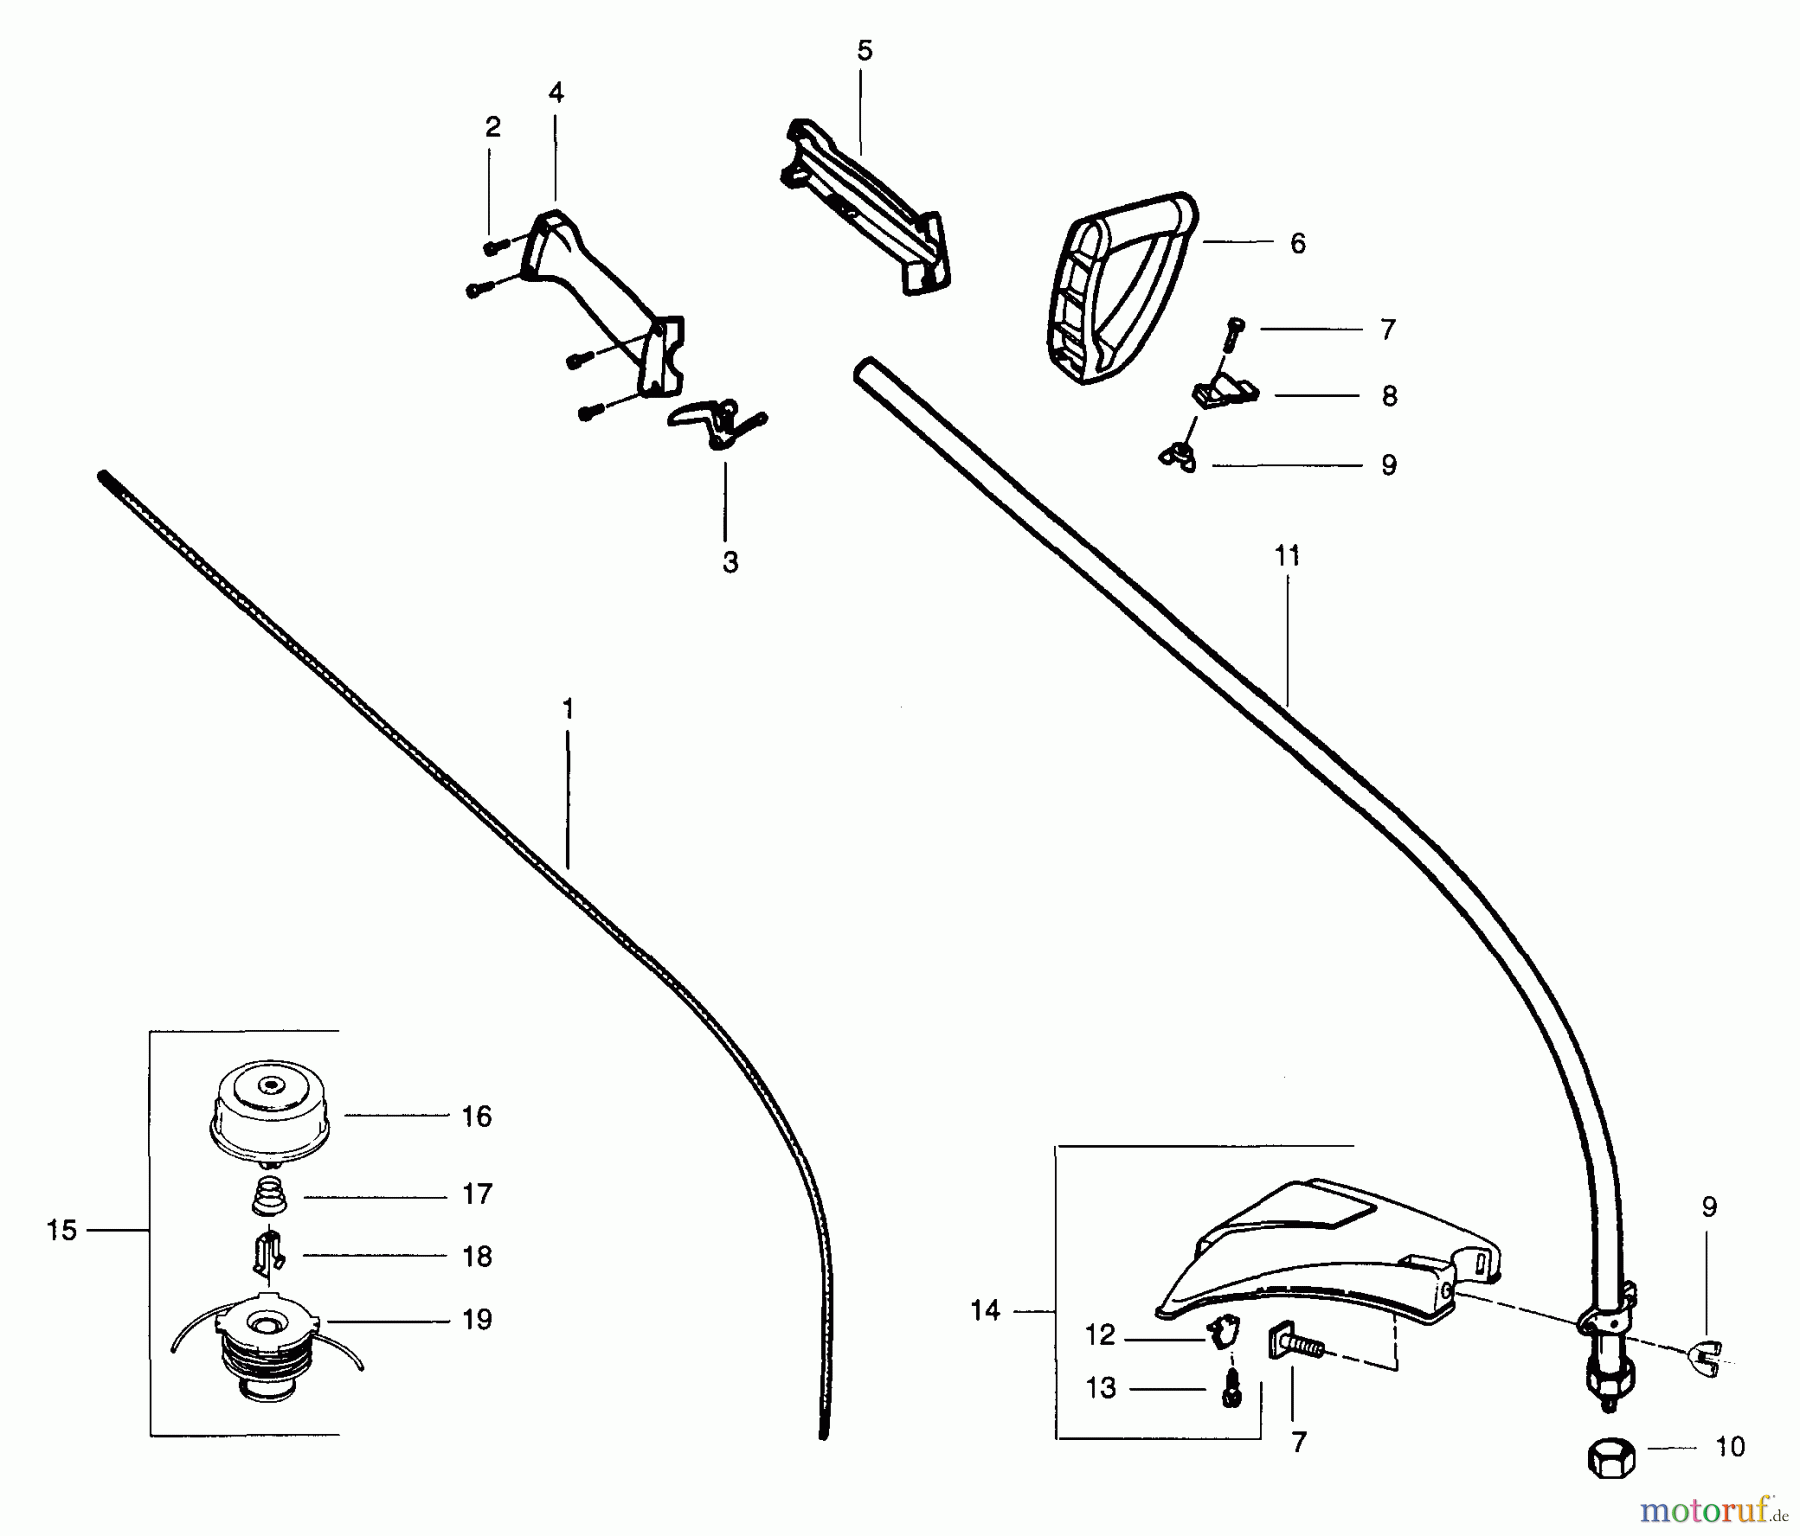  Poulan / Weed Eater Motorsensen, Trimmer PT3000 - Poulan String Trimmer Cutting Head & Driveshaft